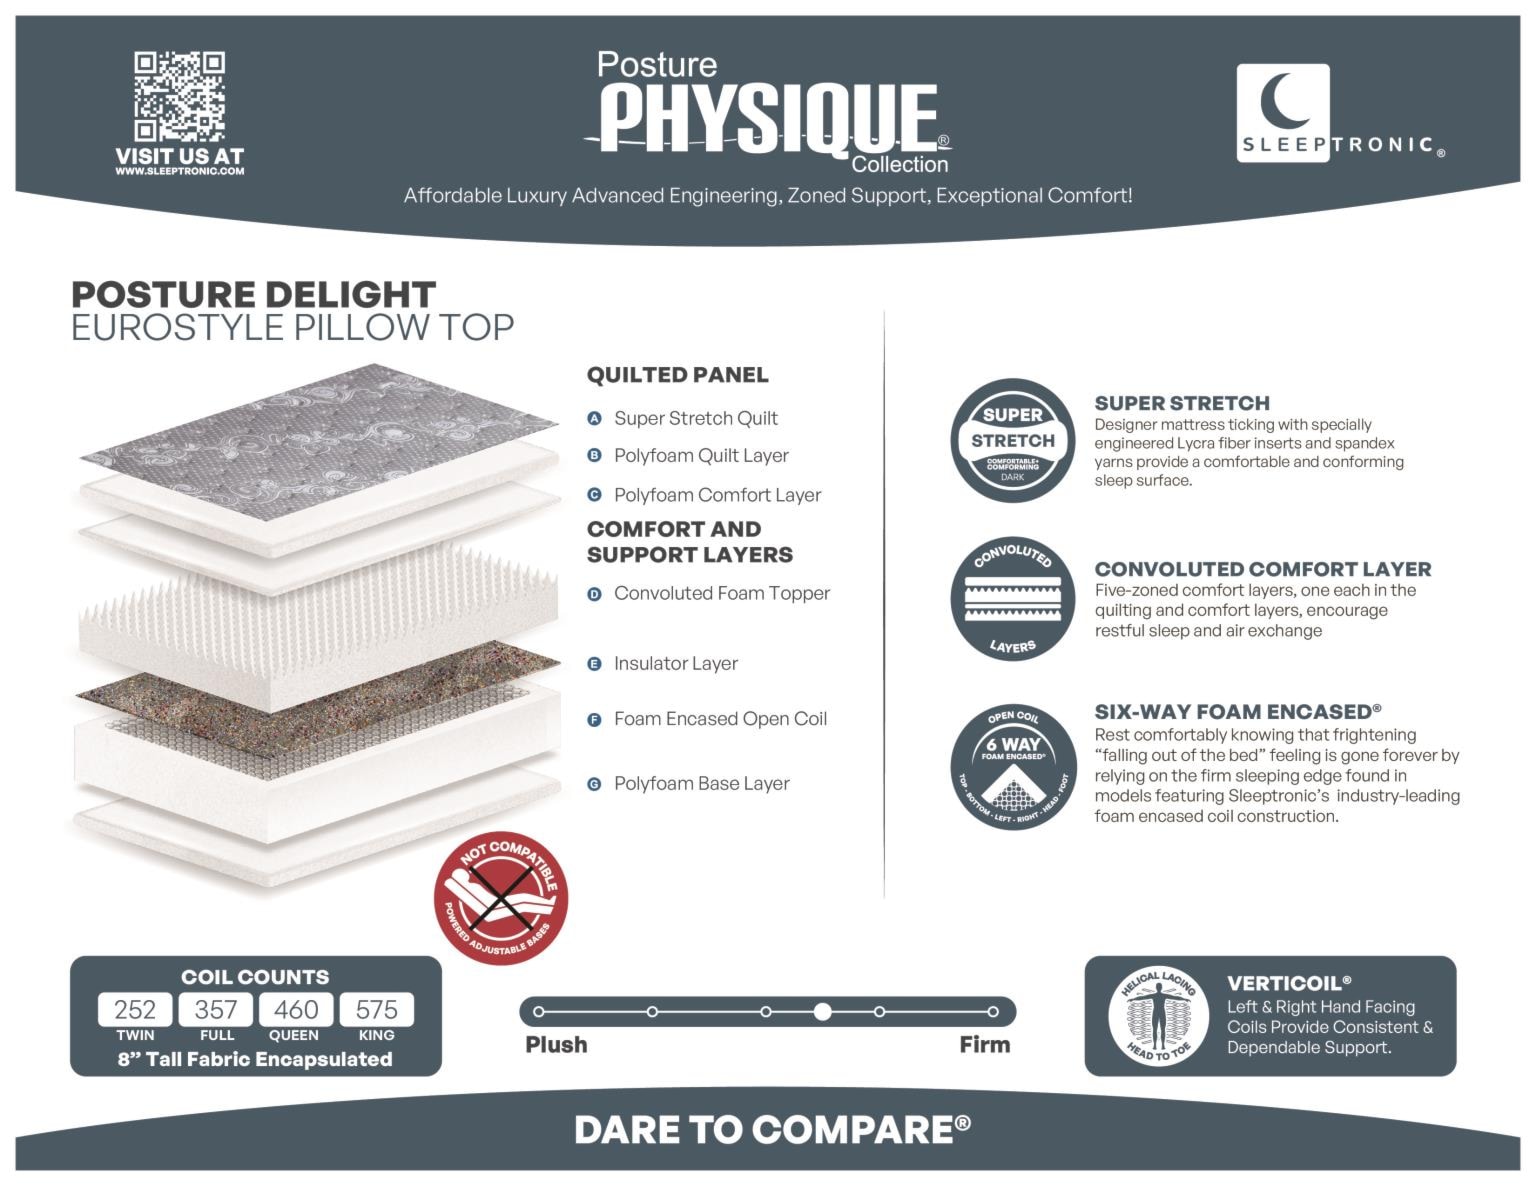 Posture Physique Delight Eurostyle Pillow Top Spec Sheet